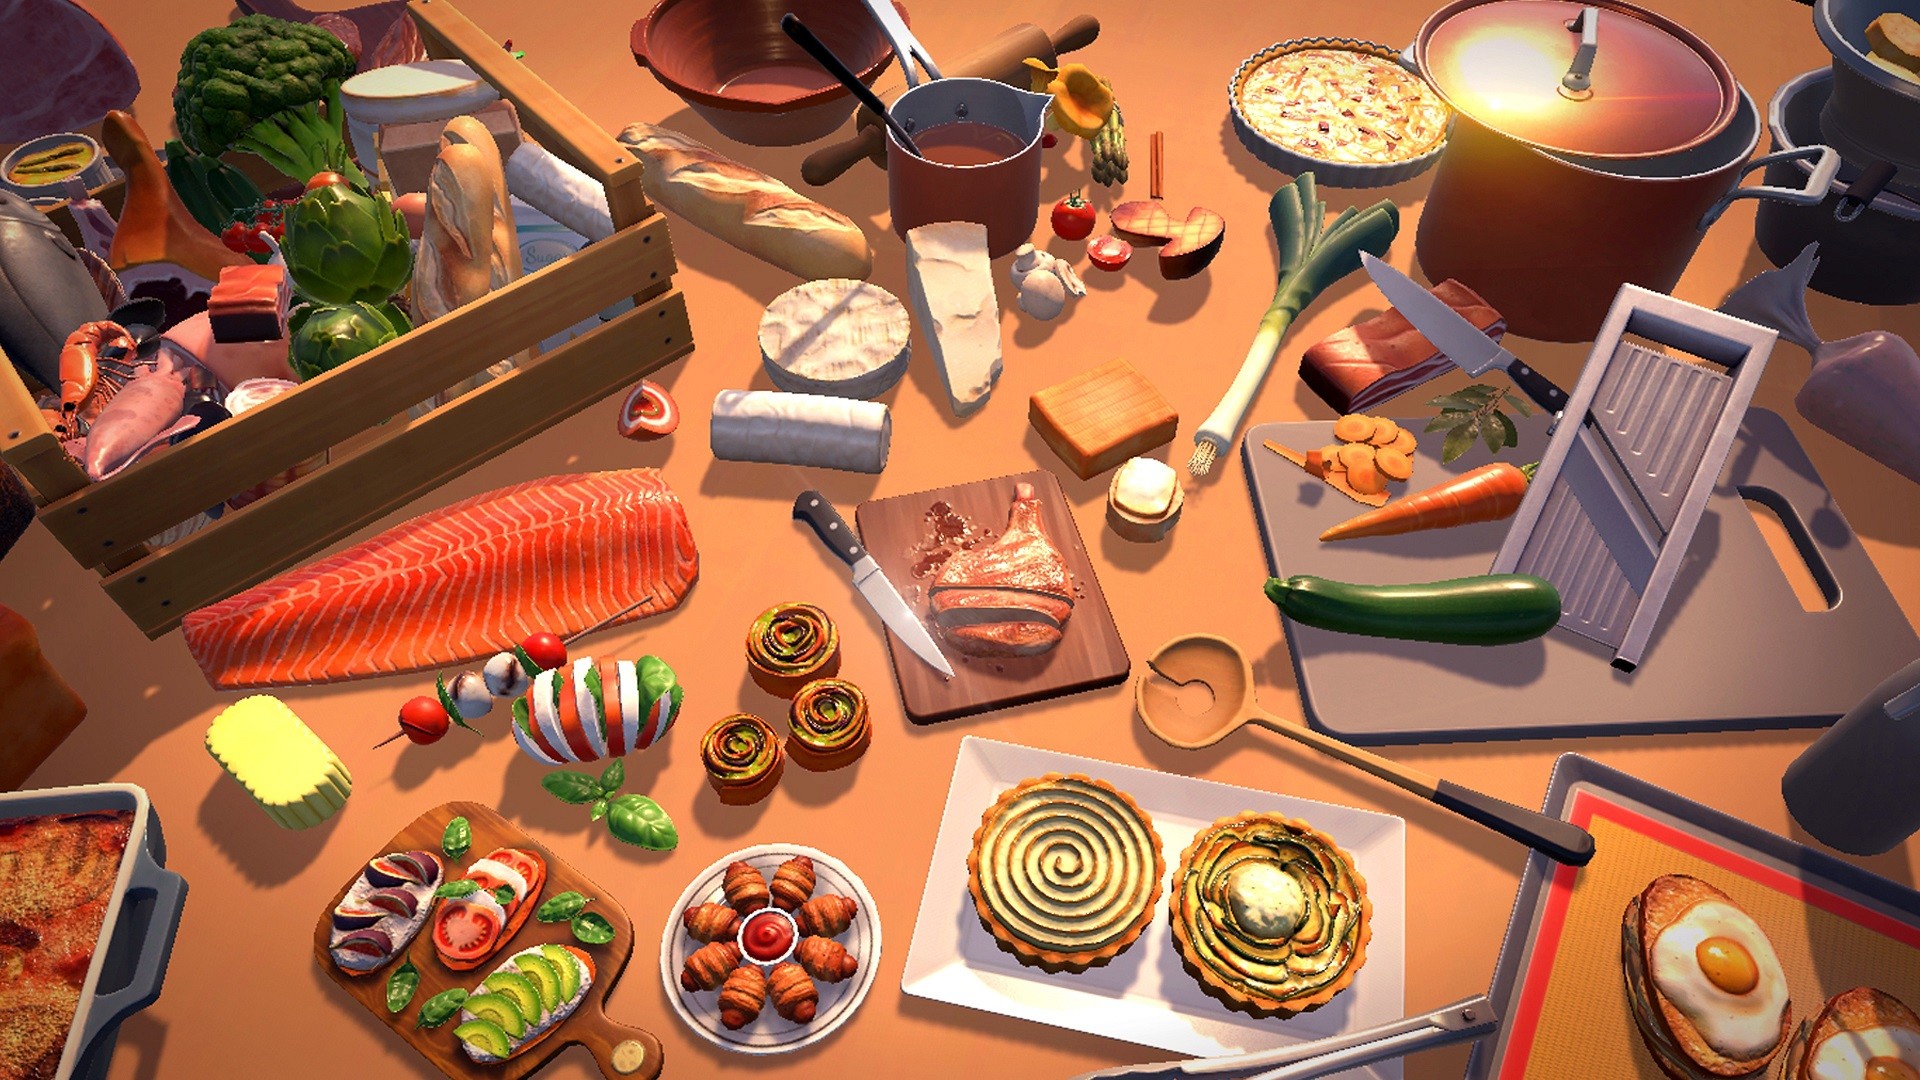 Chef Life: A Restaurant Simulator Steam CD Key 12.05 $